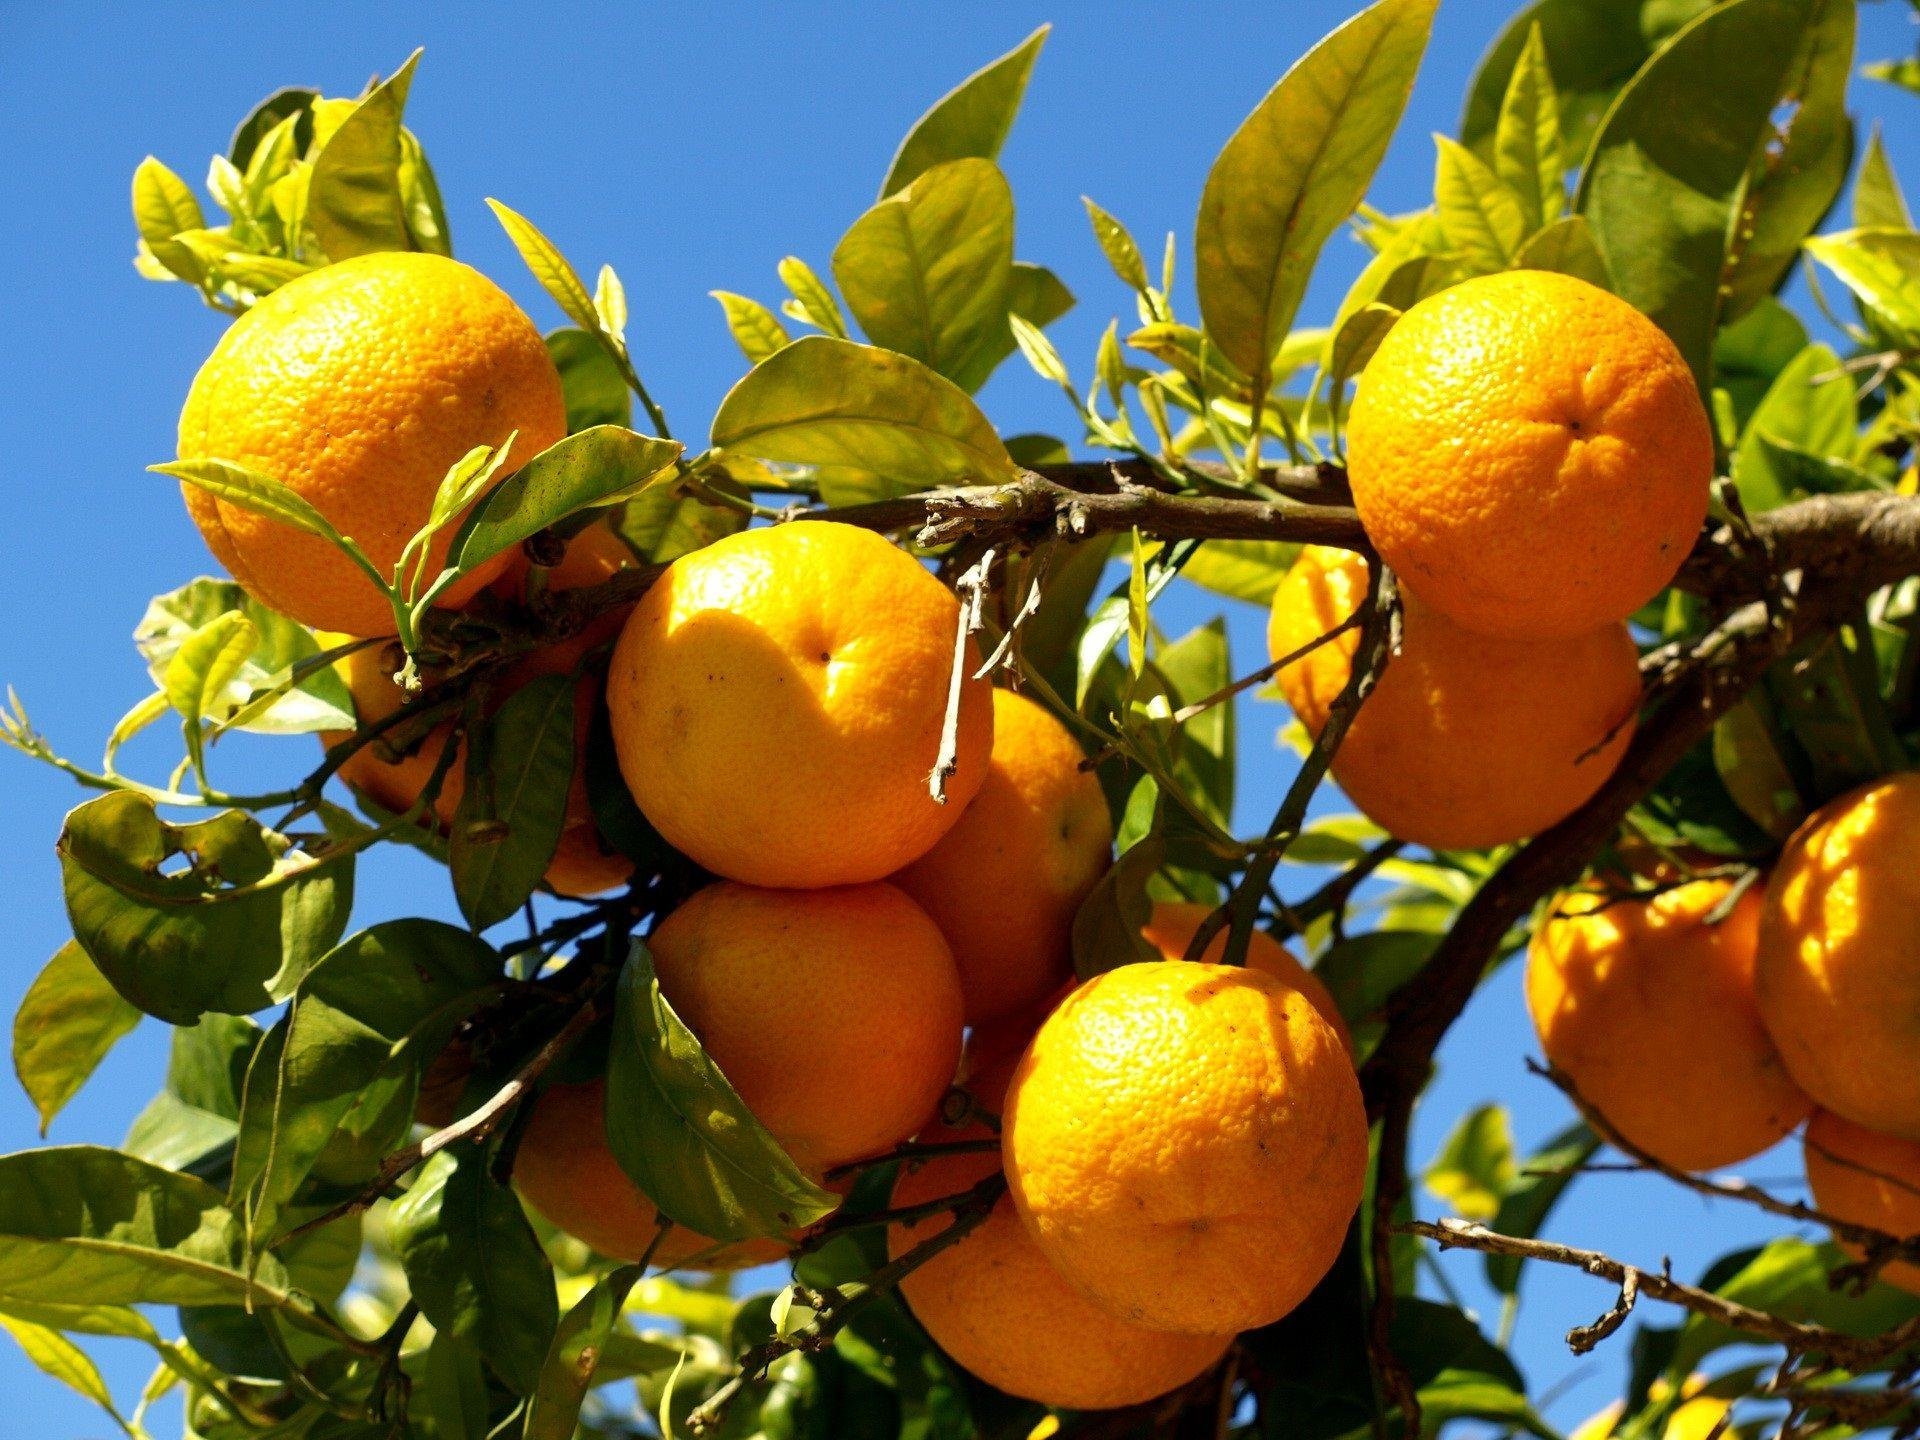 На дереве висят мандарины. Мандарин померанец. Бразилия апельсины. Померанец дерево. Цитрус мандарин (плоды желто-оранжевые).